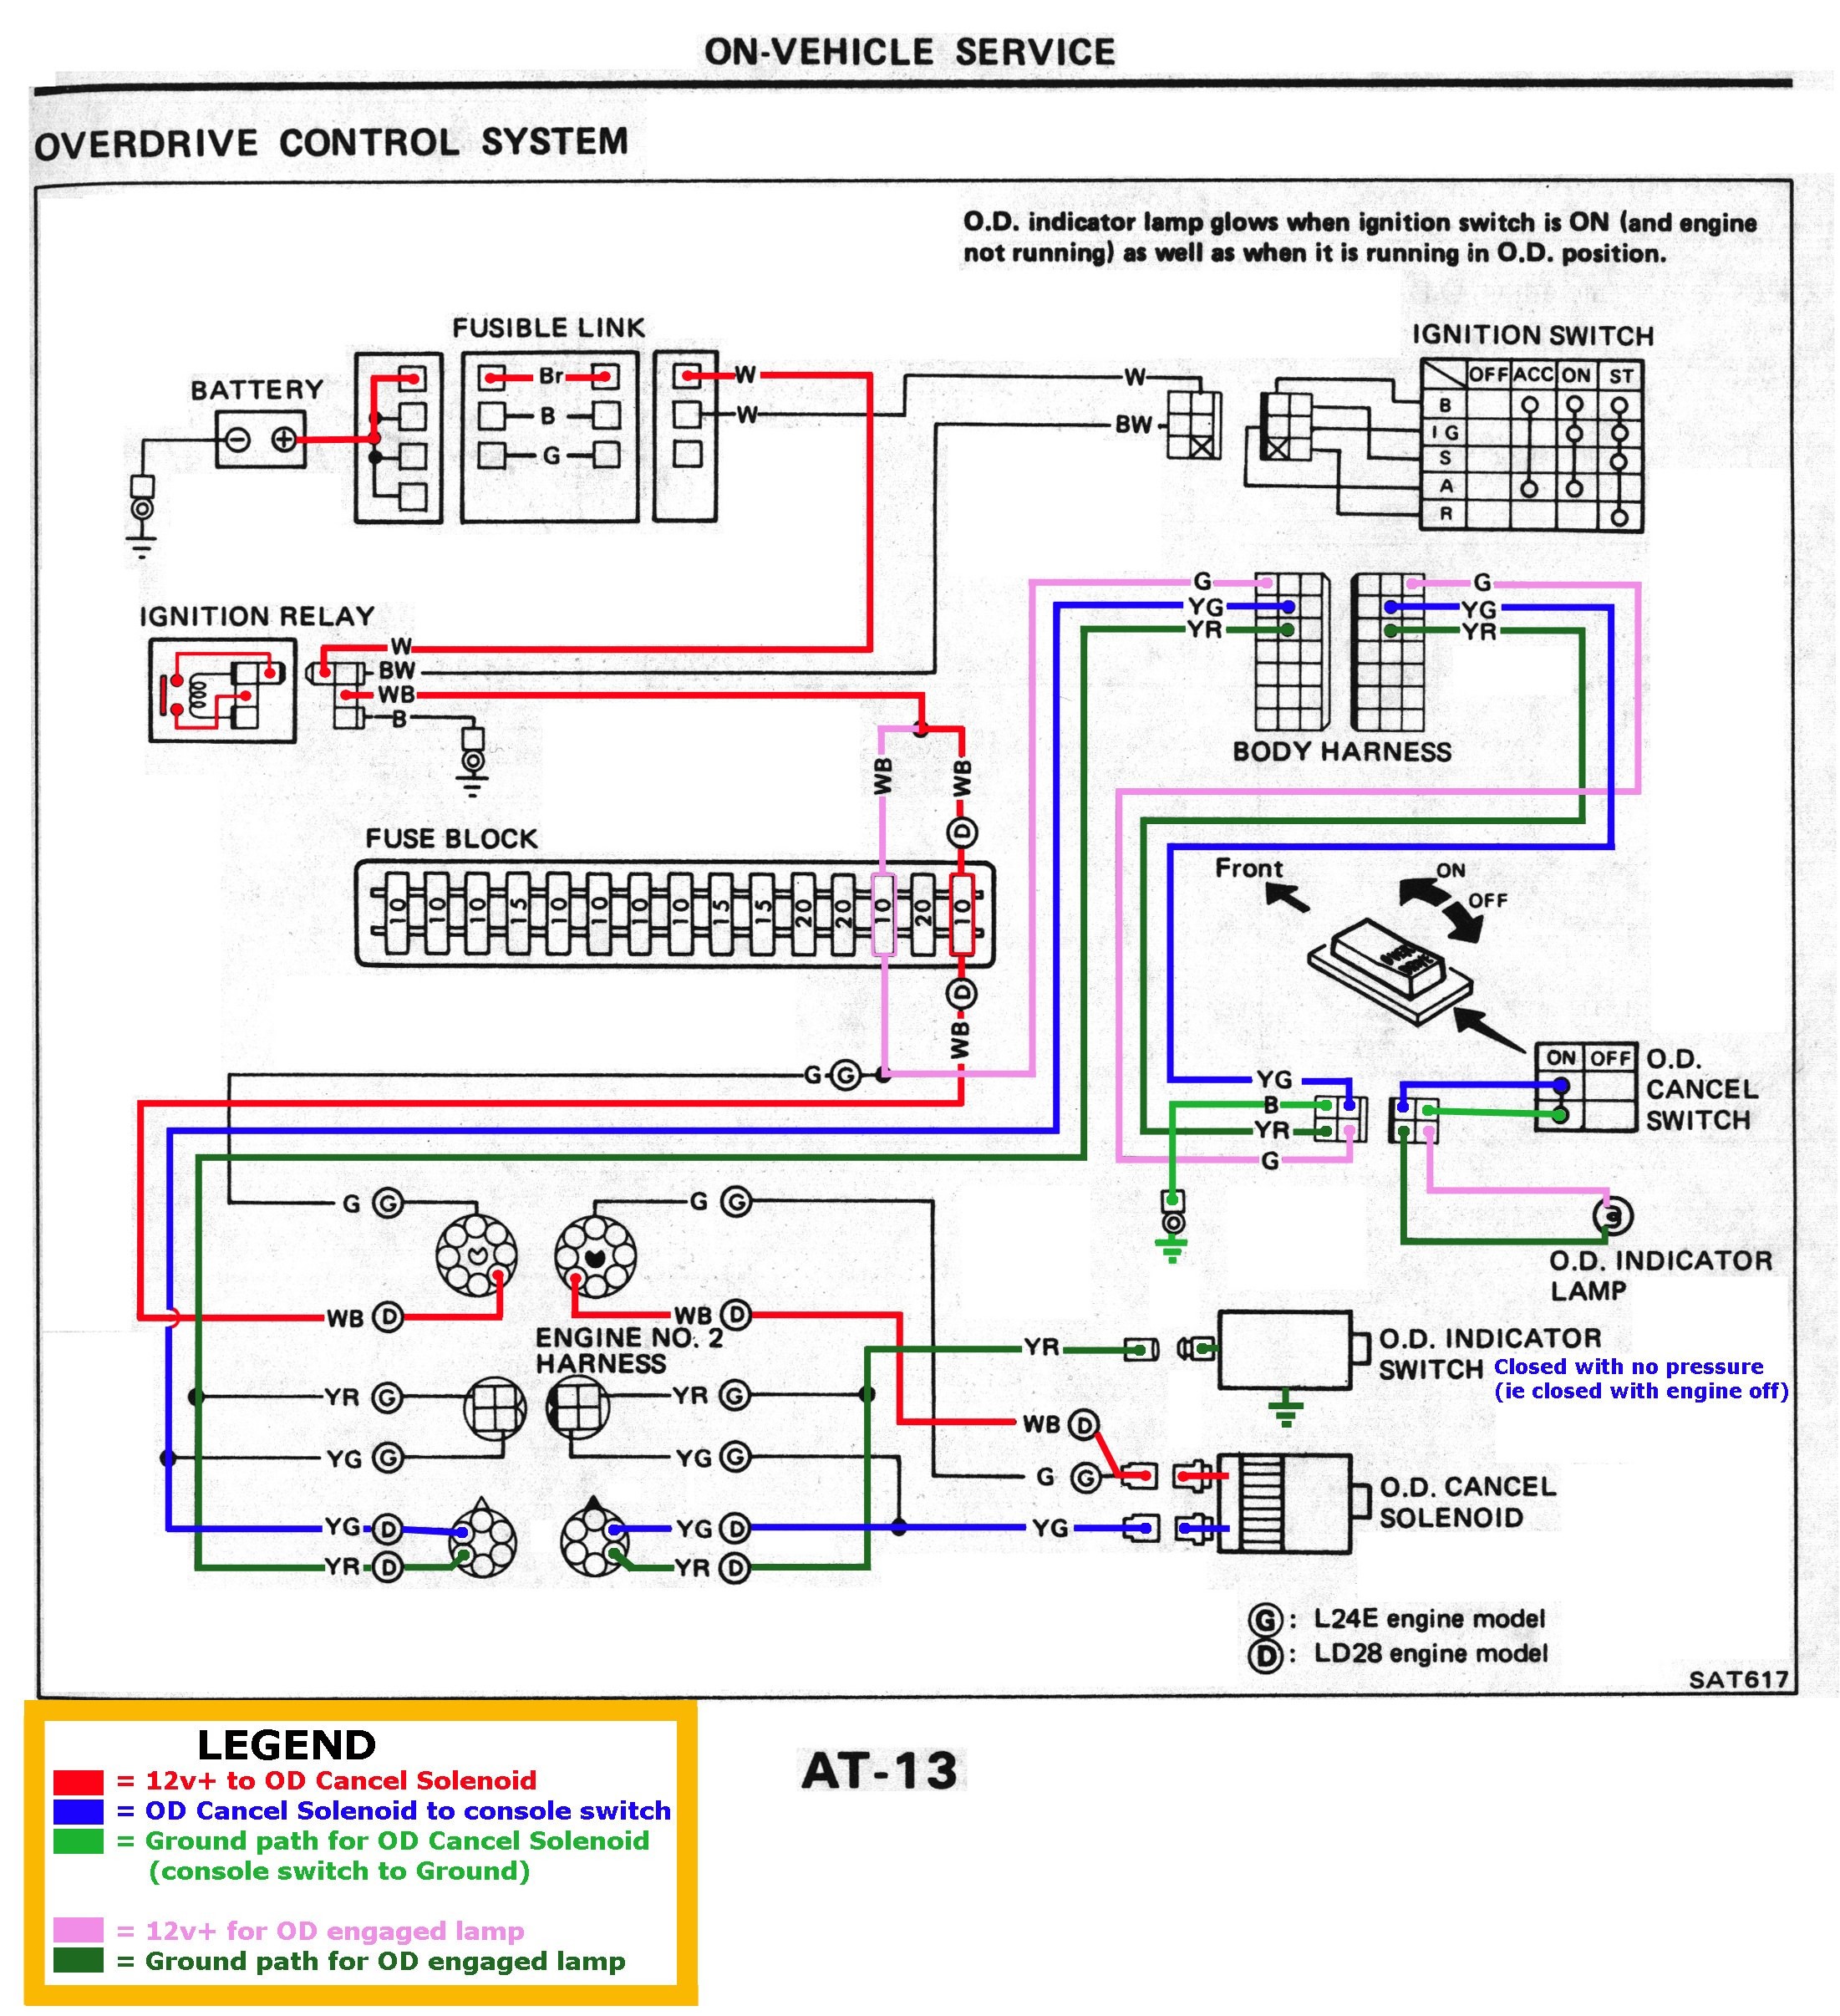 Motorised Valve Wiring Diagram Gas solenoid Valve Wiring Diagram Reference solenoid Valve Wiring Of Motorised Valve Wiring Diagram